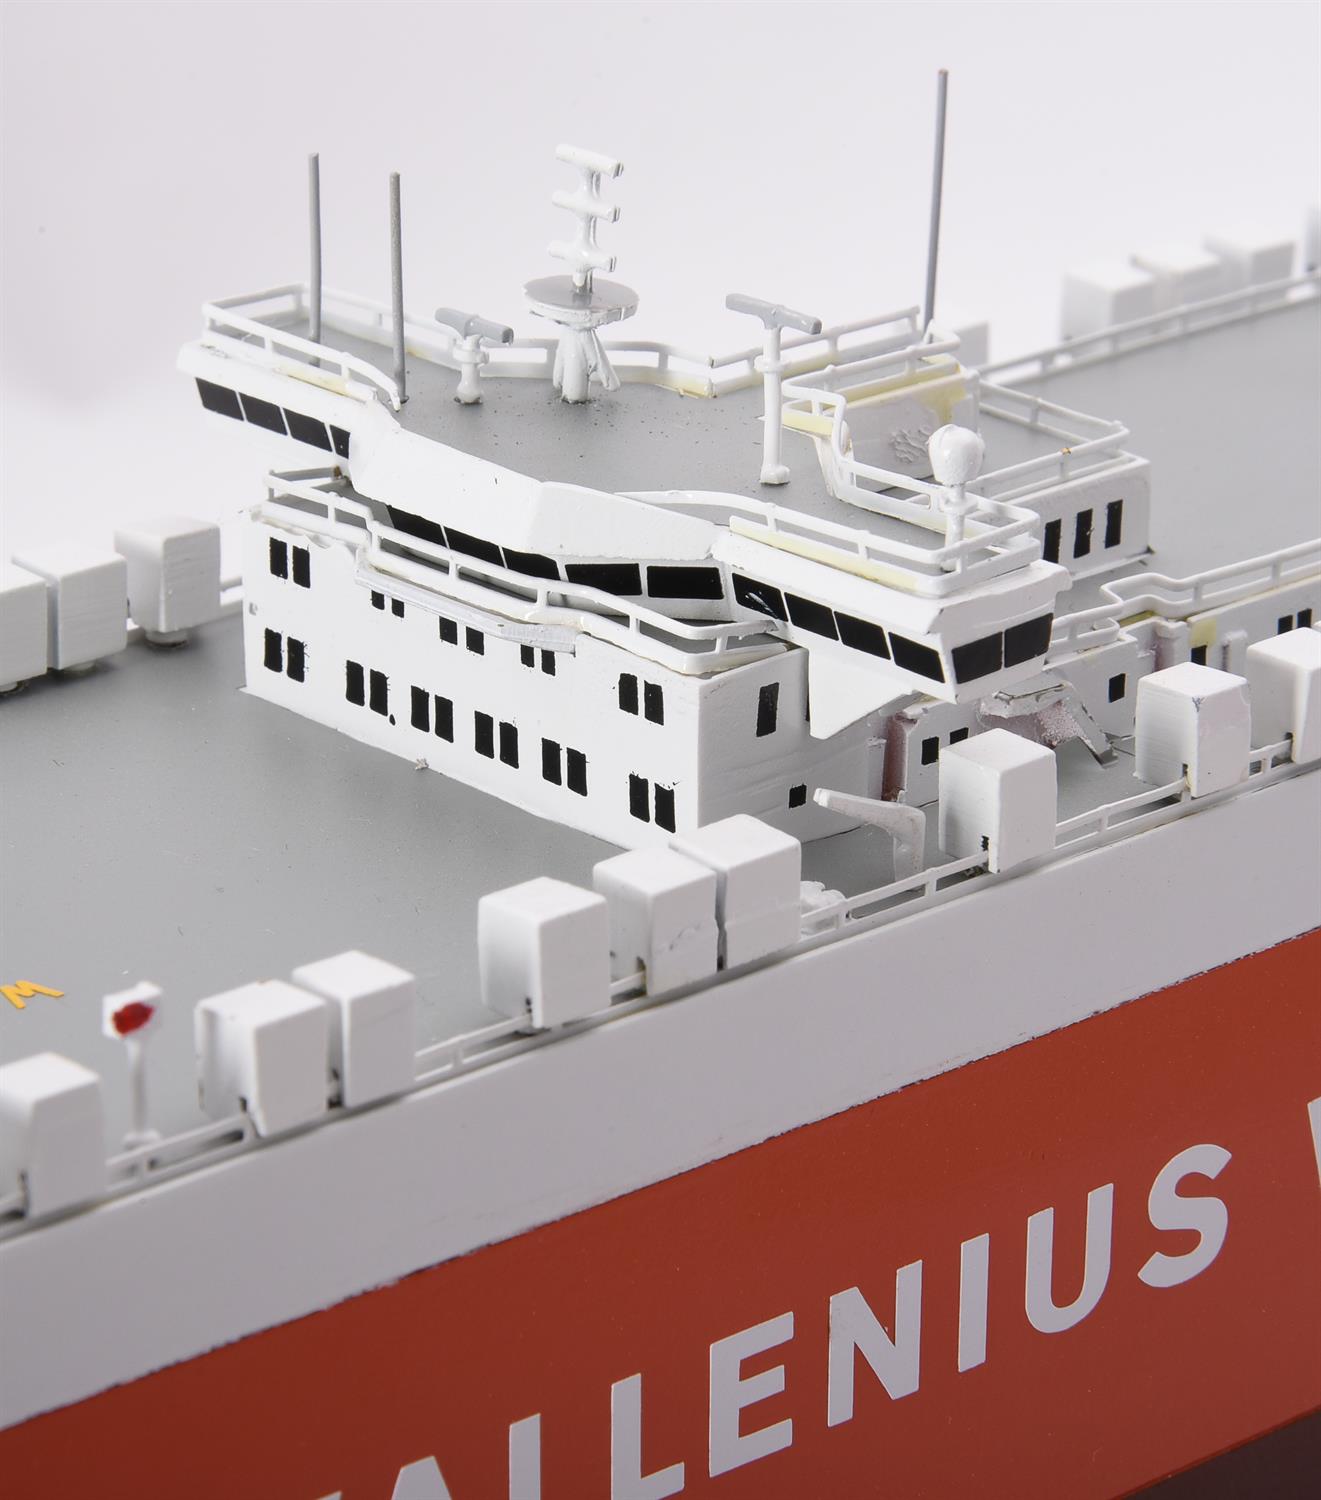 A presentation model of the cargo ship 'Wallenius Wilhelmsen' - Image 6 of 6